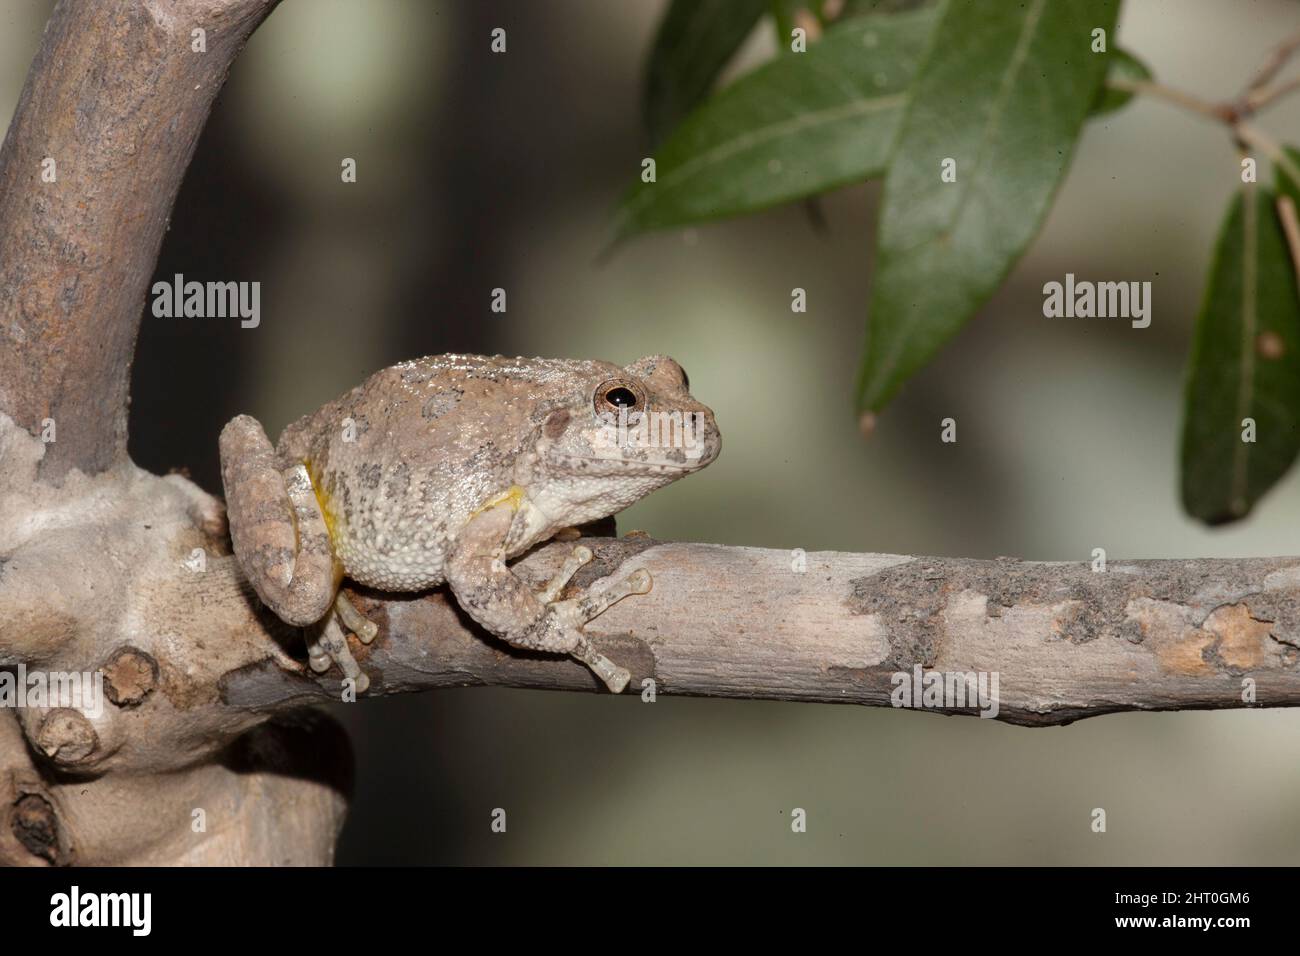 Canyon tree frog (Hyla arenicolor), crouched on slender branch, about 5 cm long. Madera Canyon, Santa Rita Mountains, Arizona, USA Stock Photo